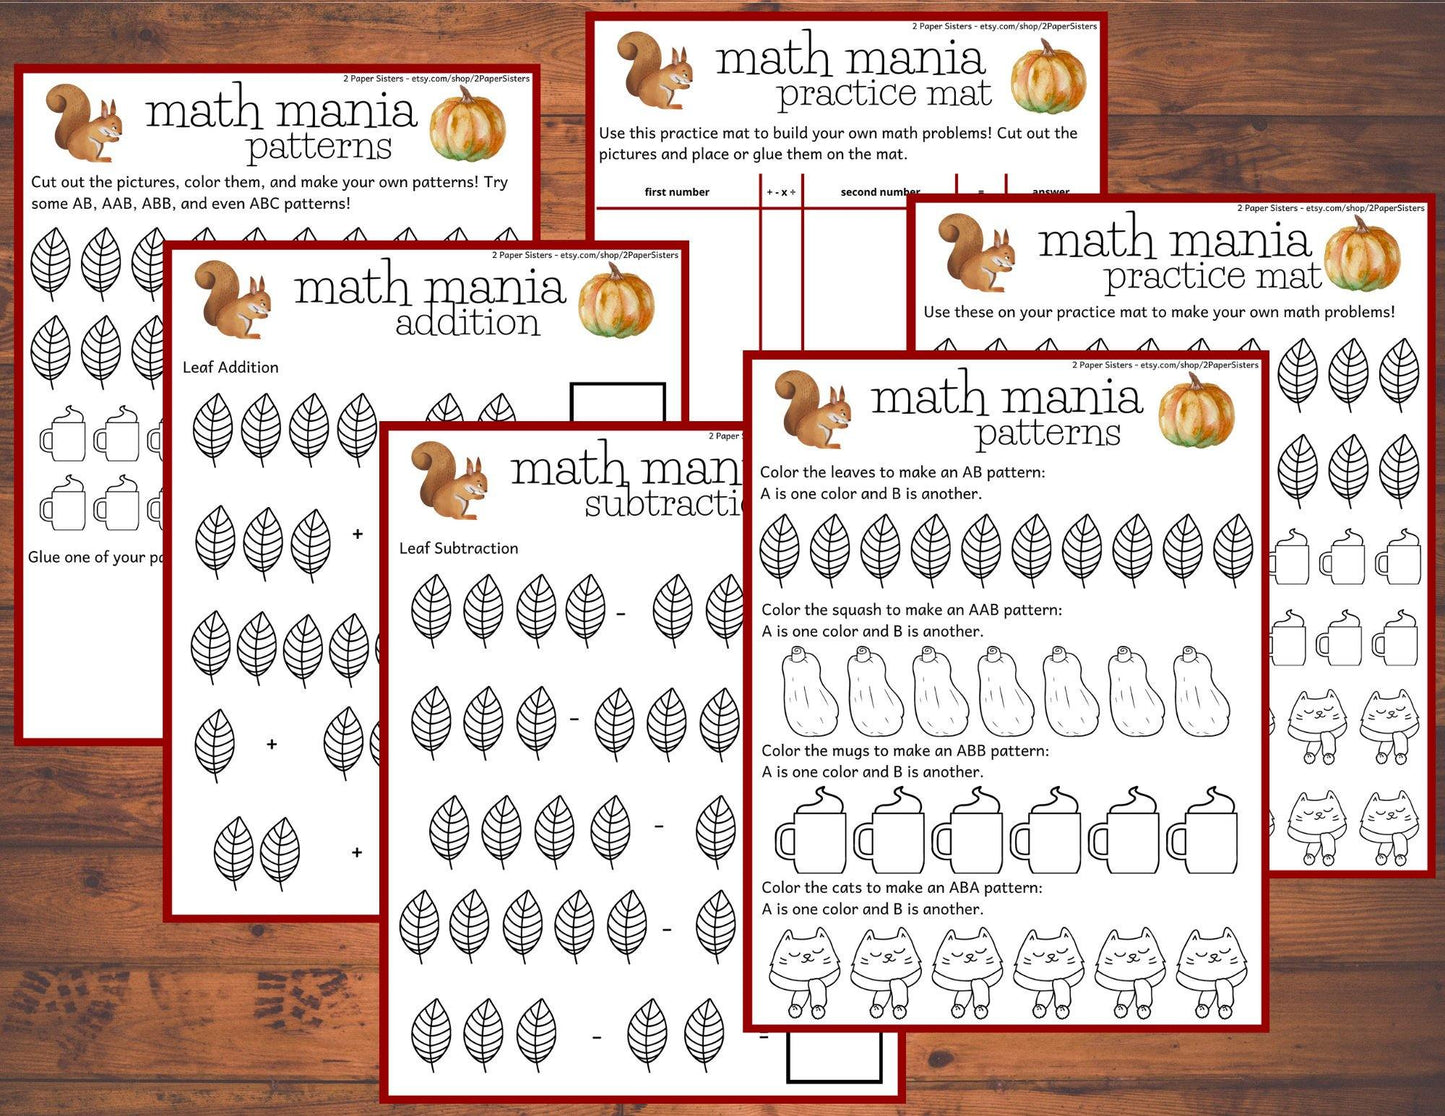 Preschool/Kindergarten Mega Bundle: STEM, ages 3-7 - Digital Download - 2 Paper Sisters